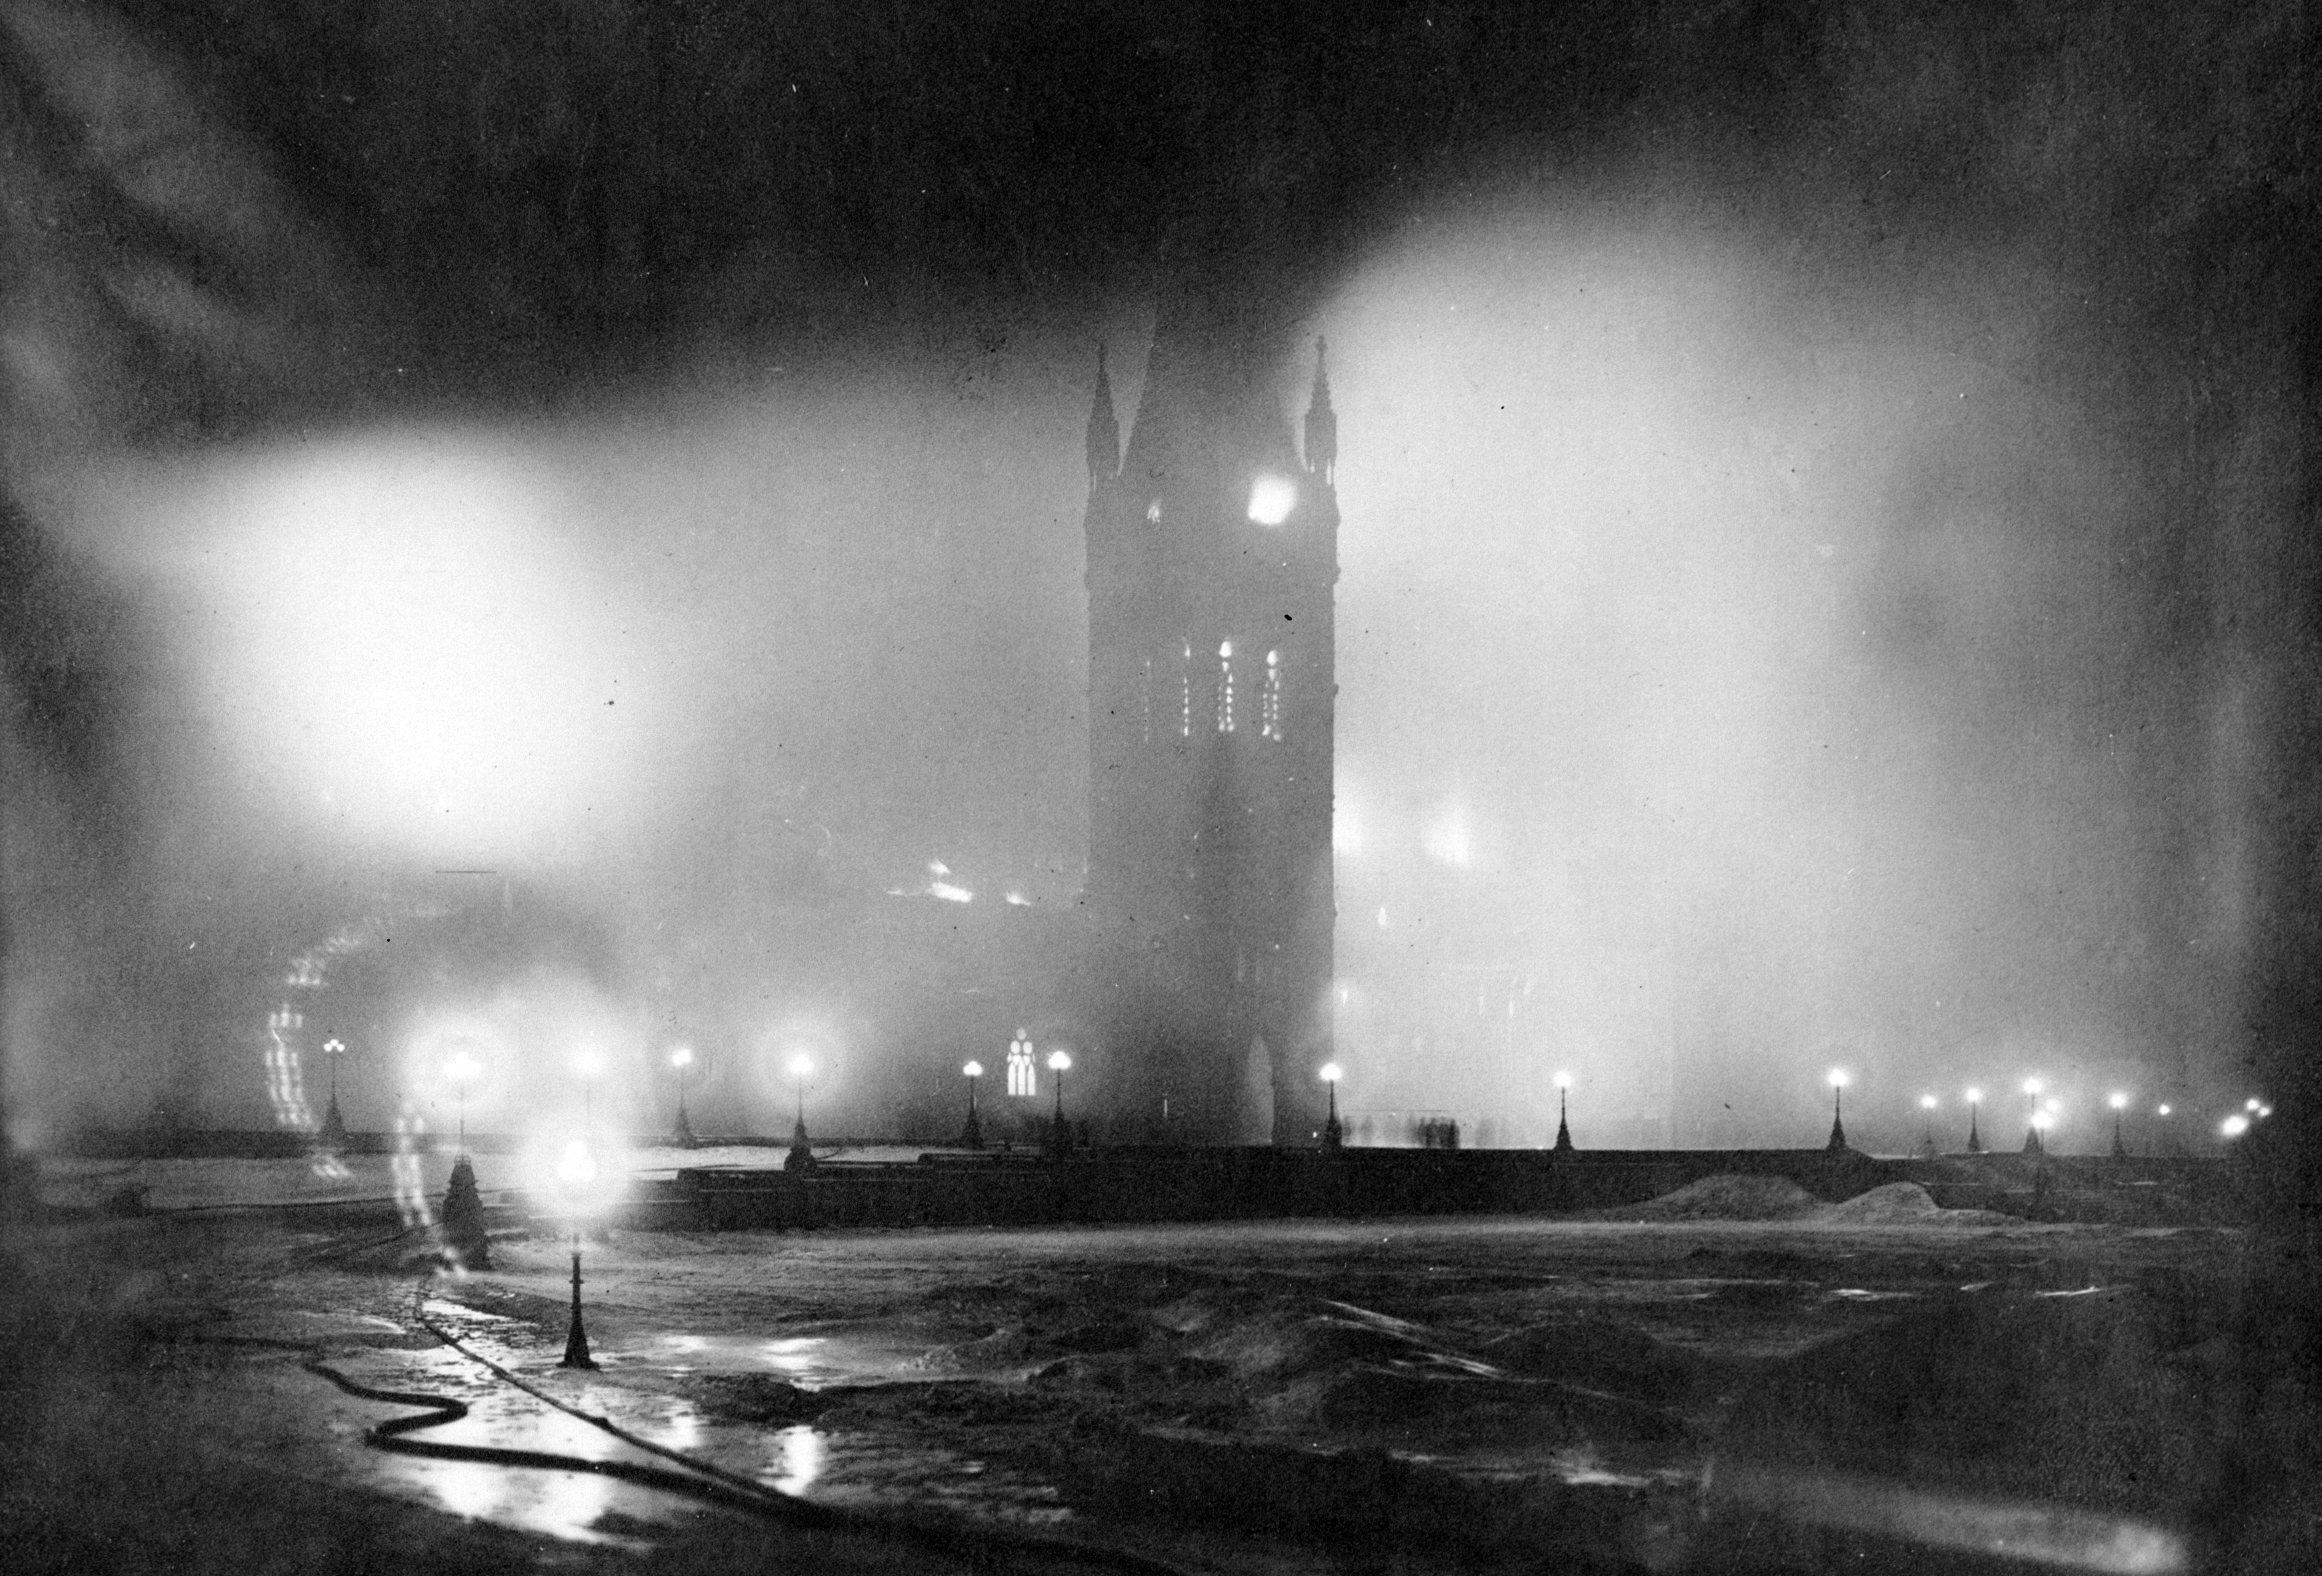 Parliament Ottawa in fire